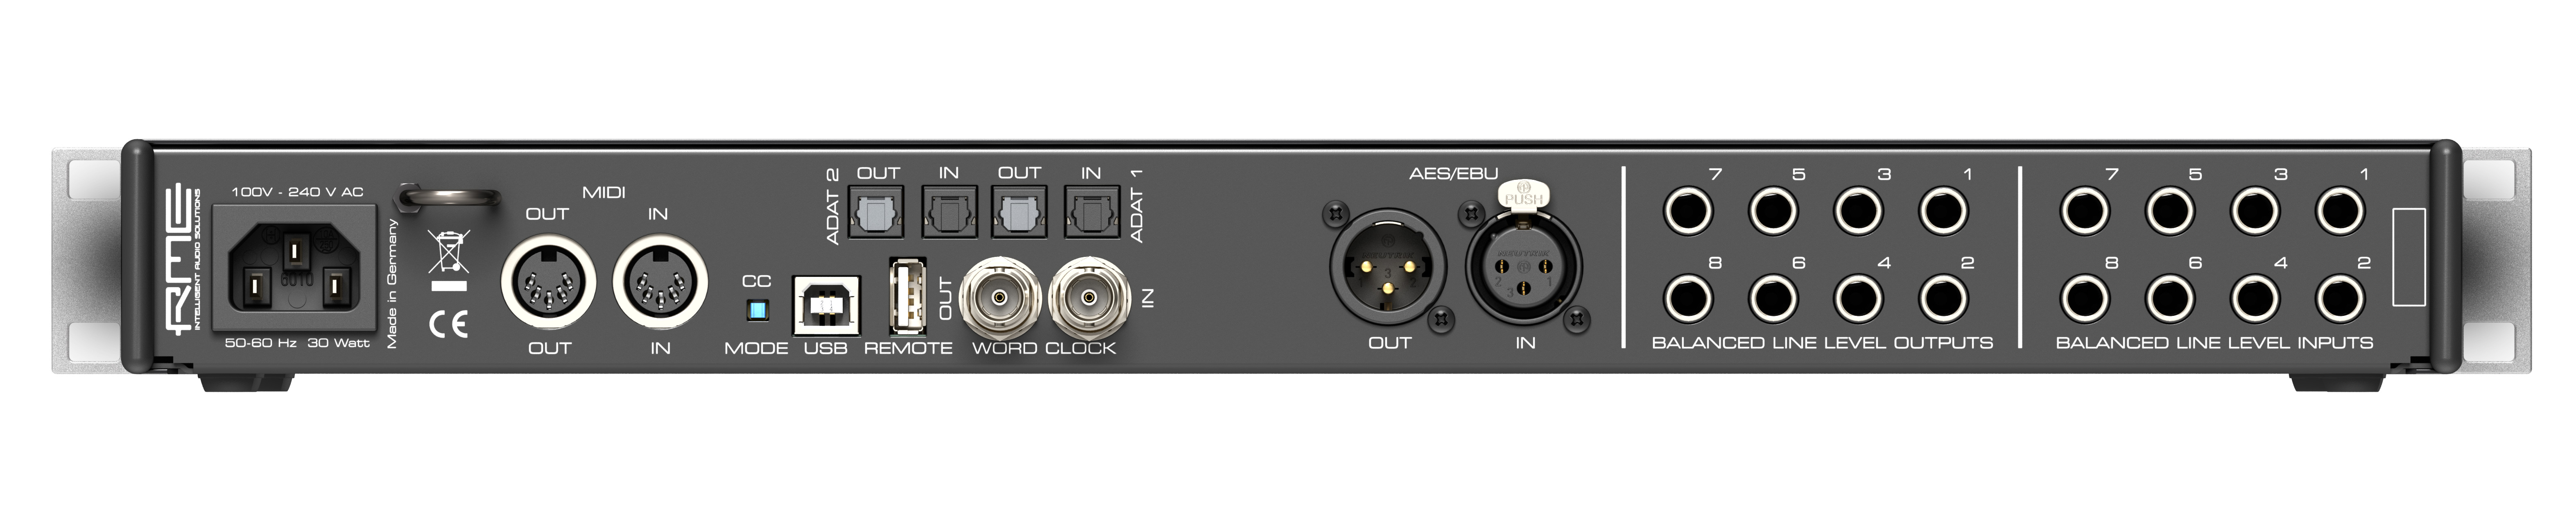 Rme Fireface 802 Fs - USB audio interface - Variation 2